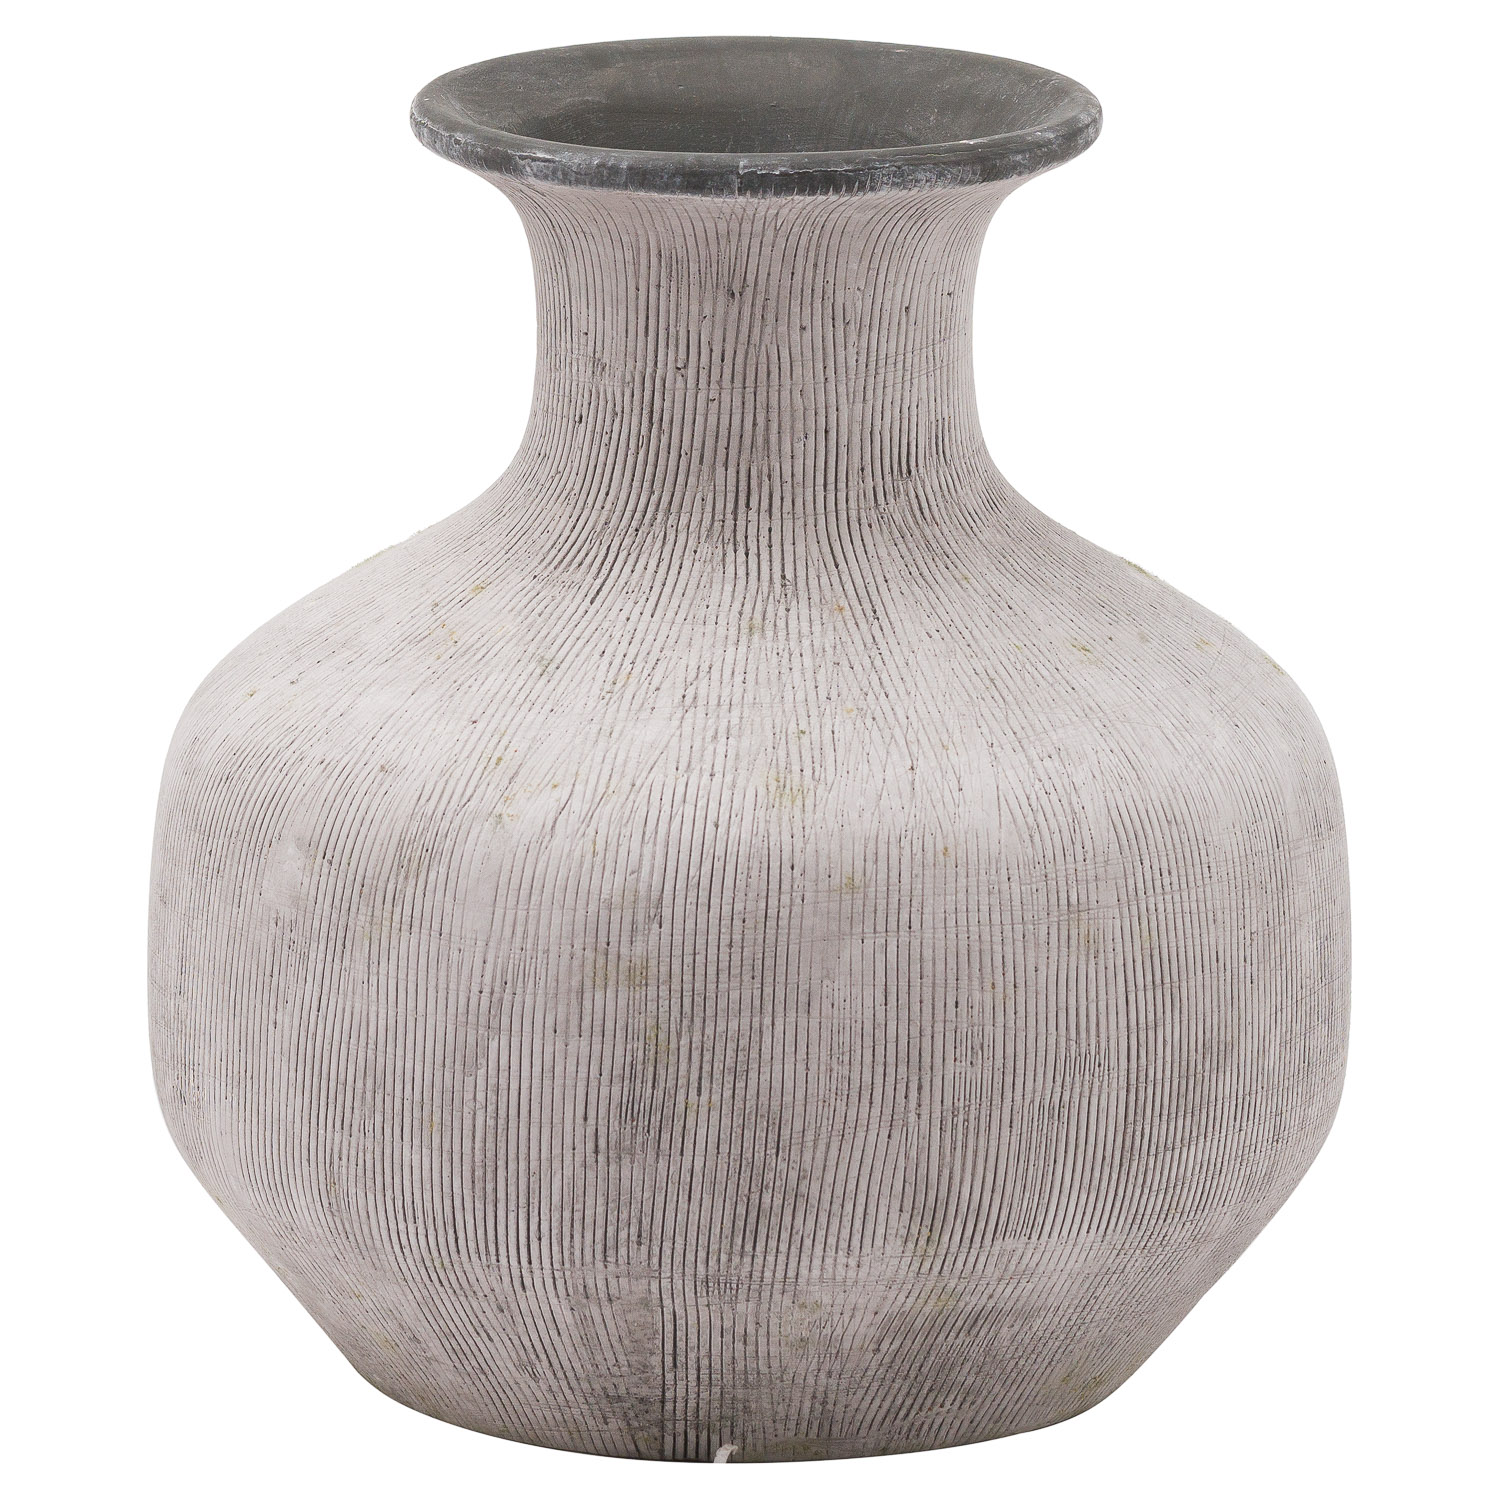 Bloomville Squat Stone Vase - Image 1